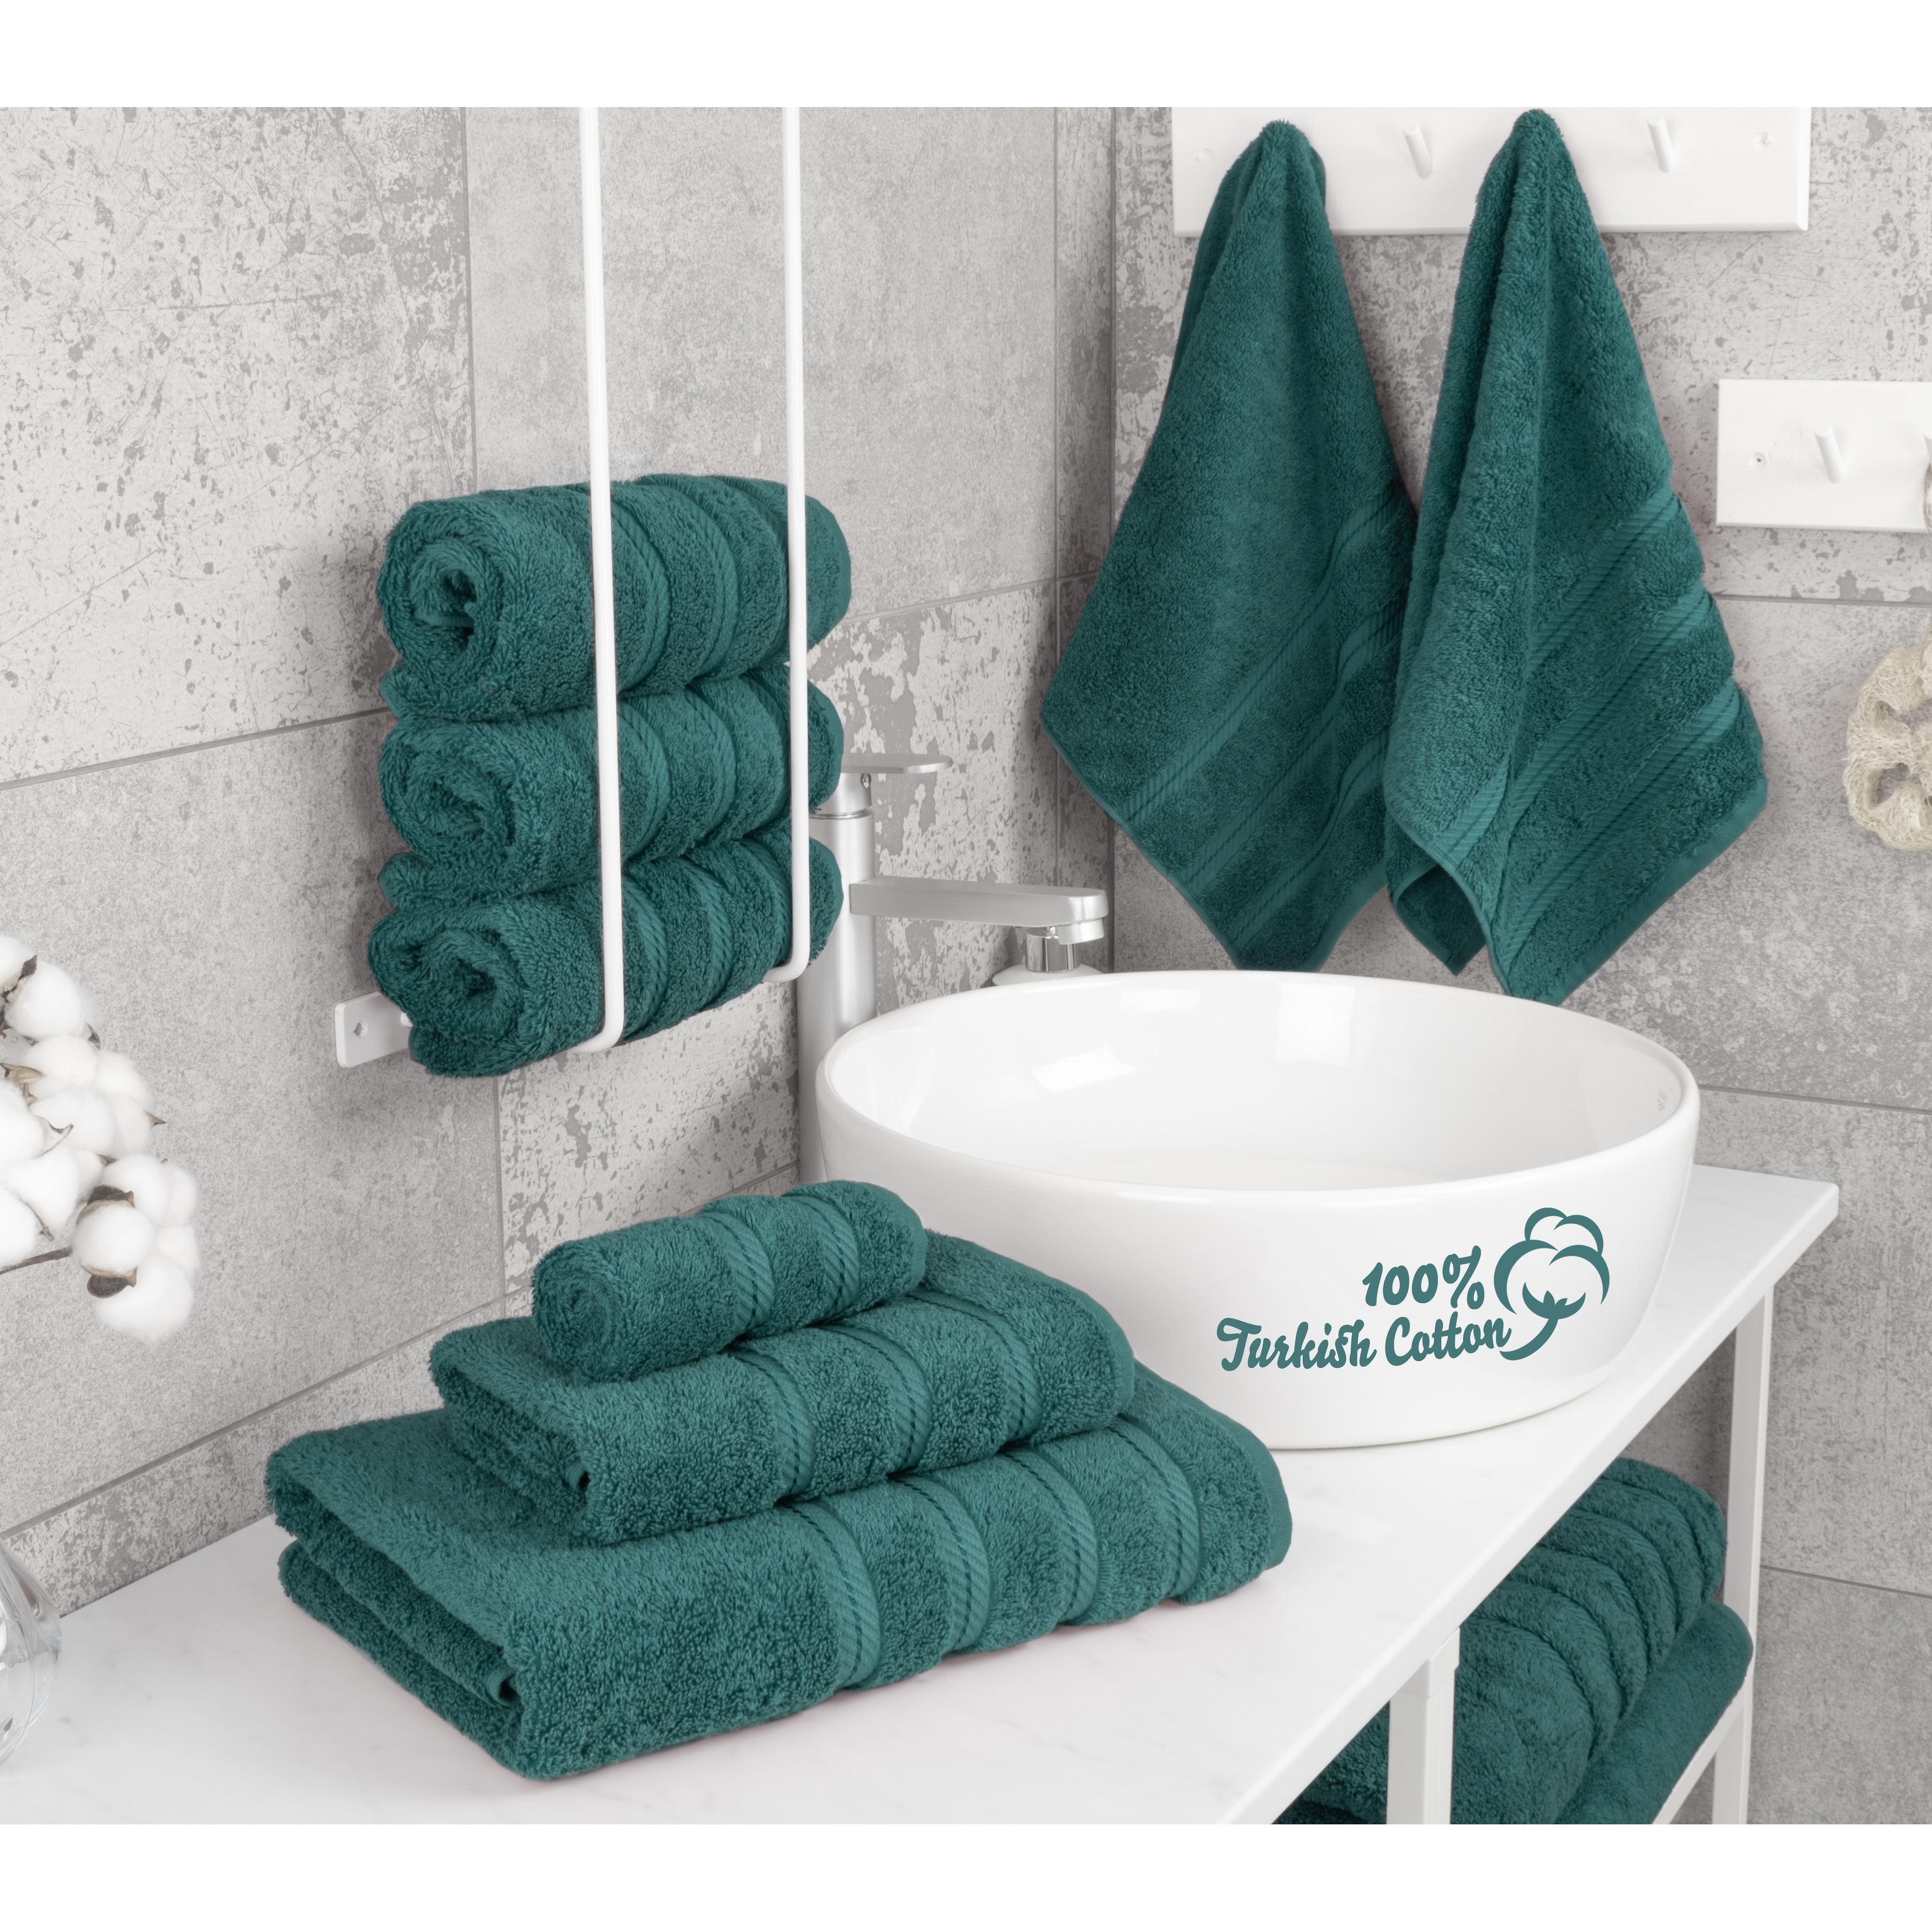 https://ak1.ostkcdn.com/images/products/is/images/direct/80618871507385da1f8dbce668126d736105405a/American-Soft-Linen-6-pc.-Turkish-Cotton-Towel-Set.jpg